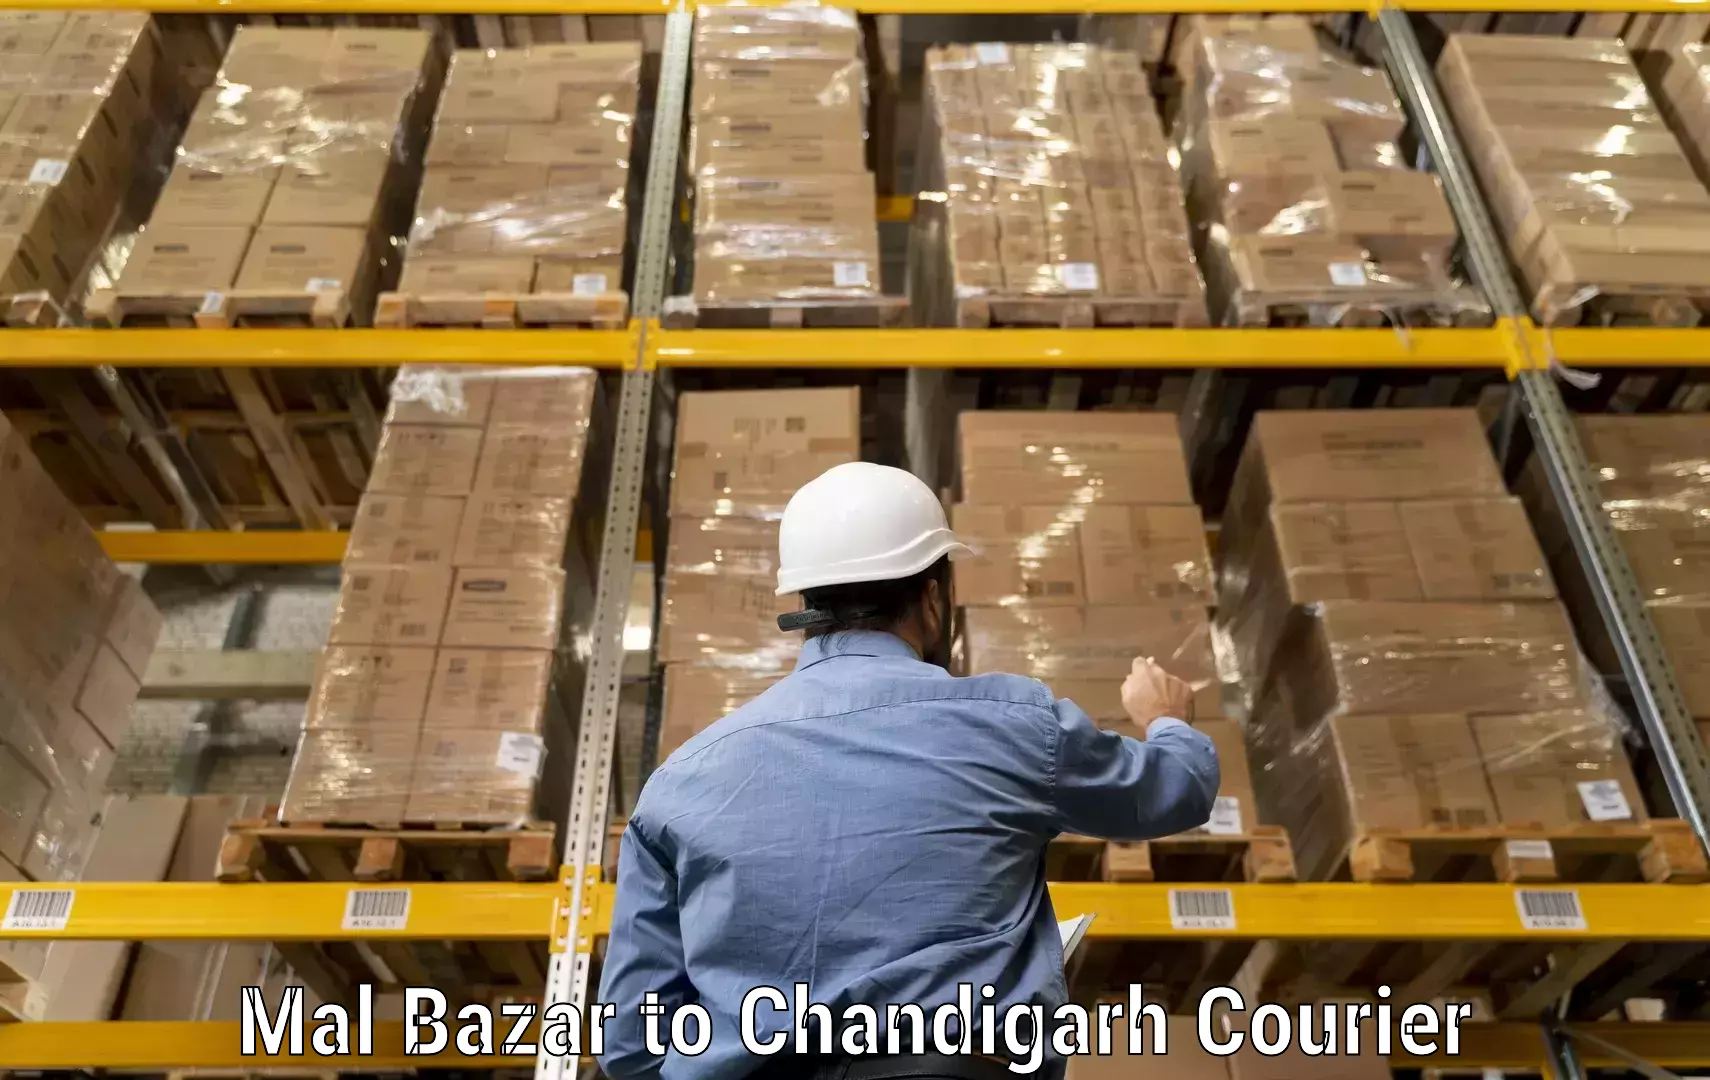 International courier networks Mal Bazar to Chandigarh